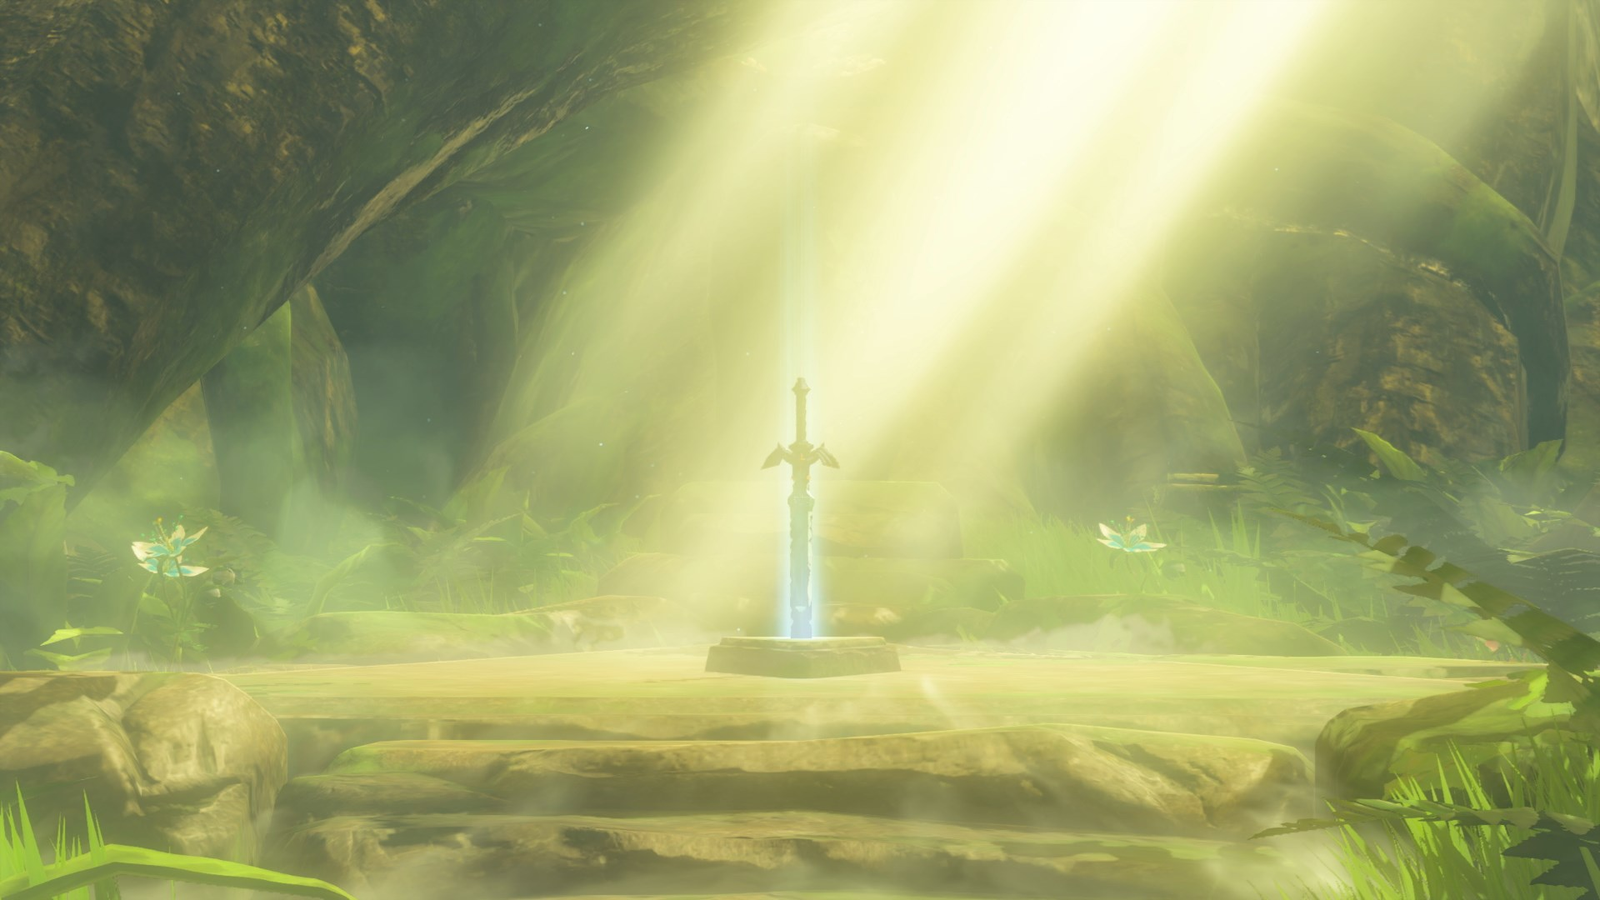 The Legend of Zelda: Breath of the Wild – The awakened Master Sword 2